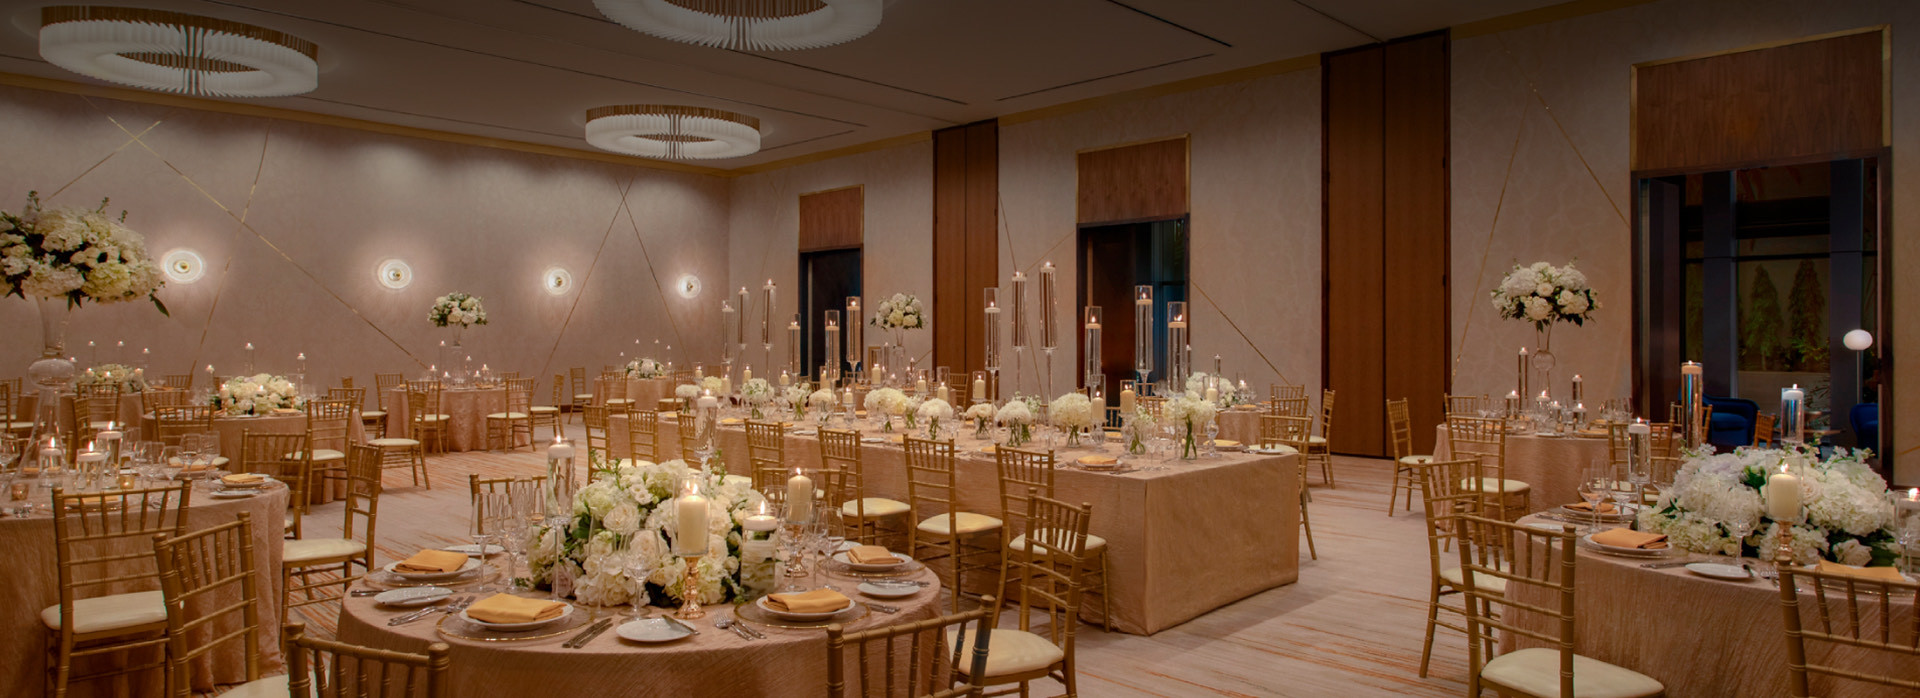 wave ballroom with wedding decor